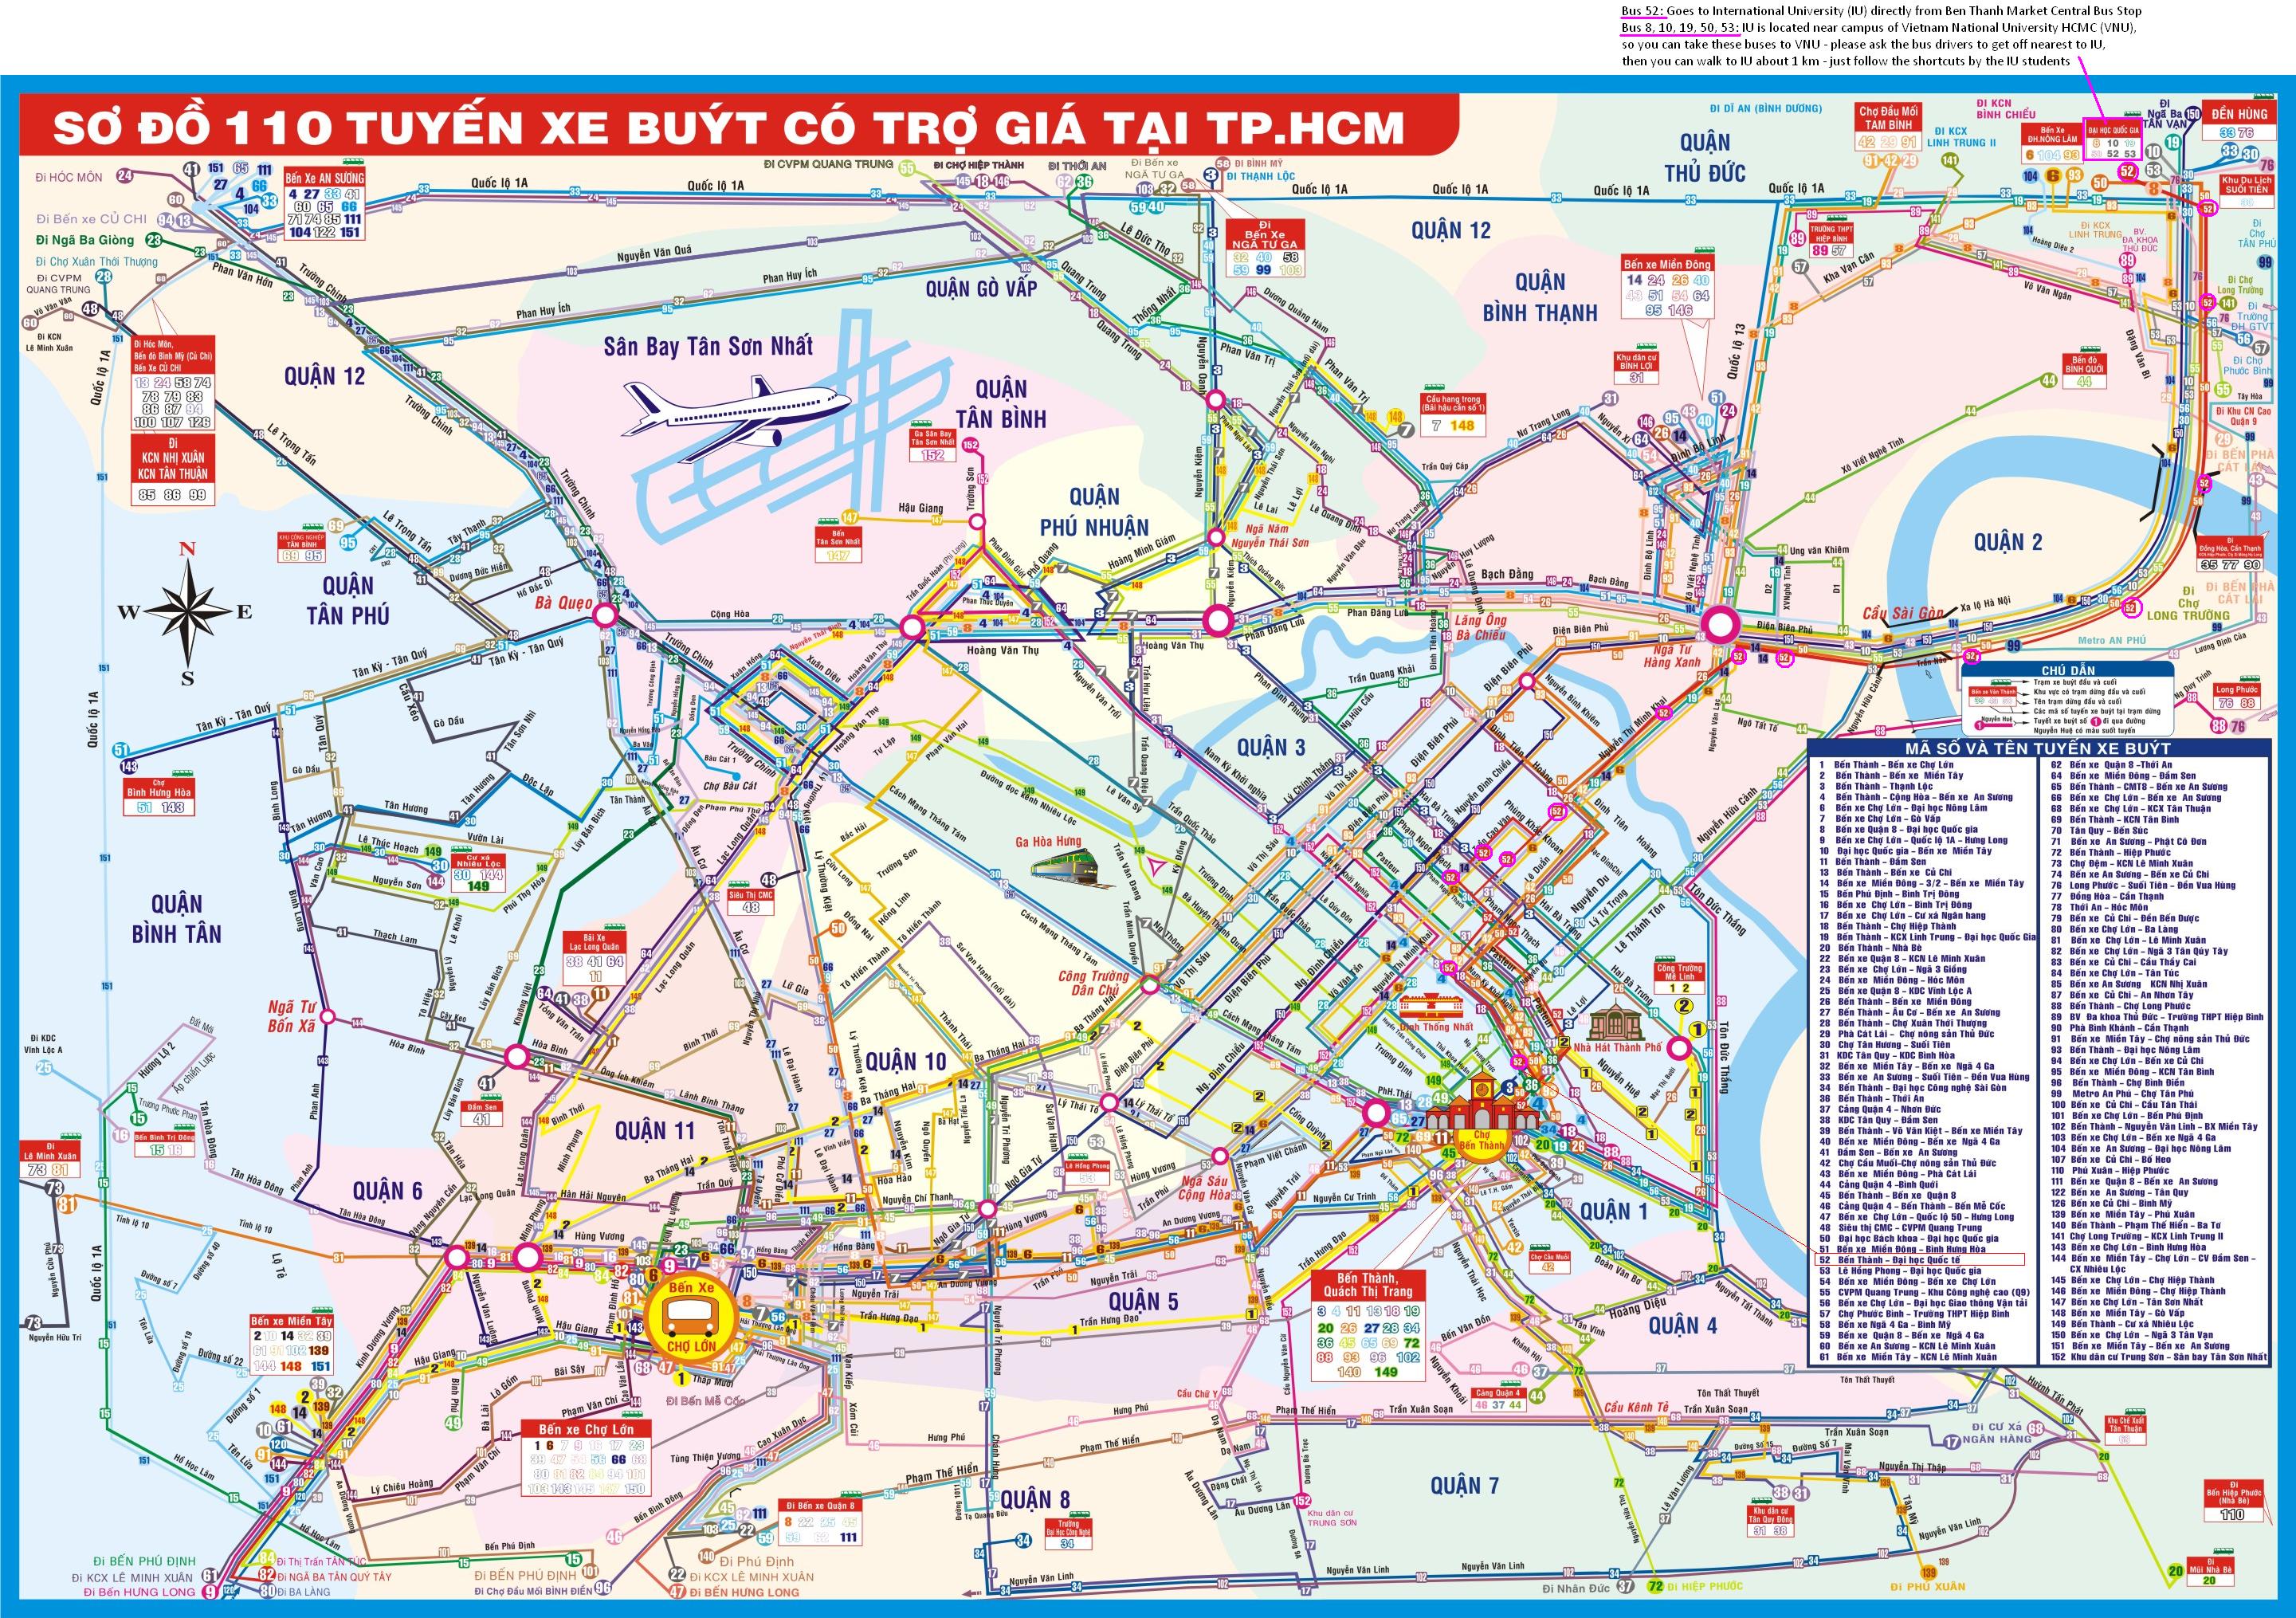 Large MRT Map